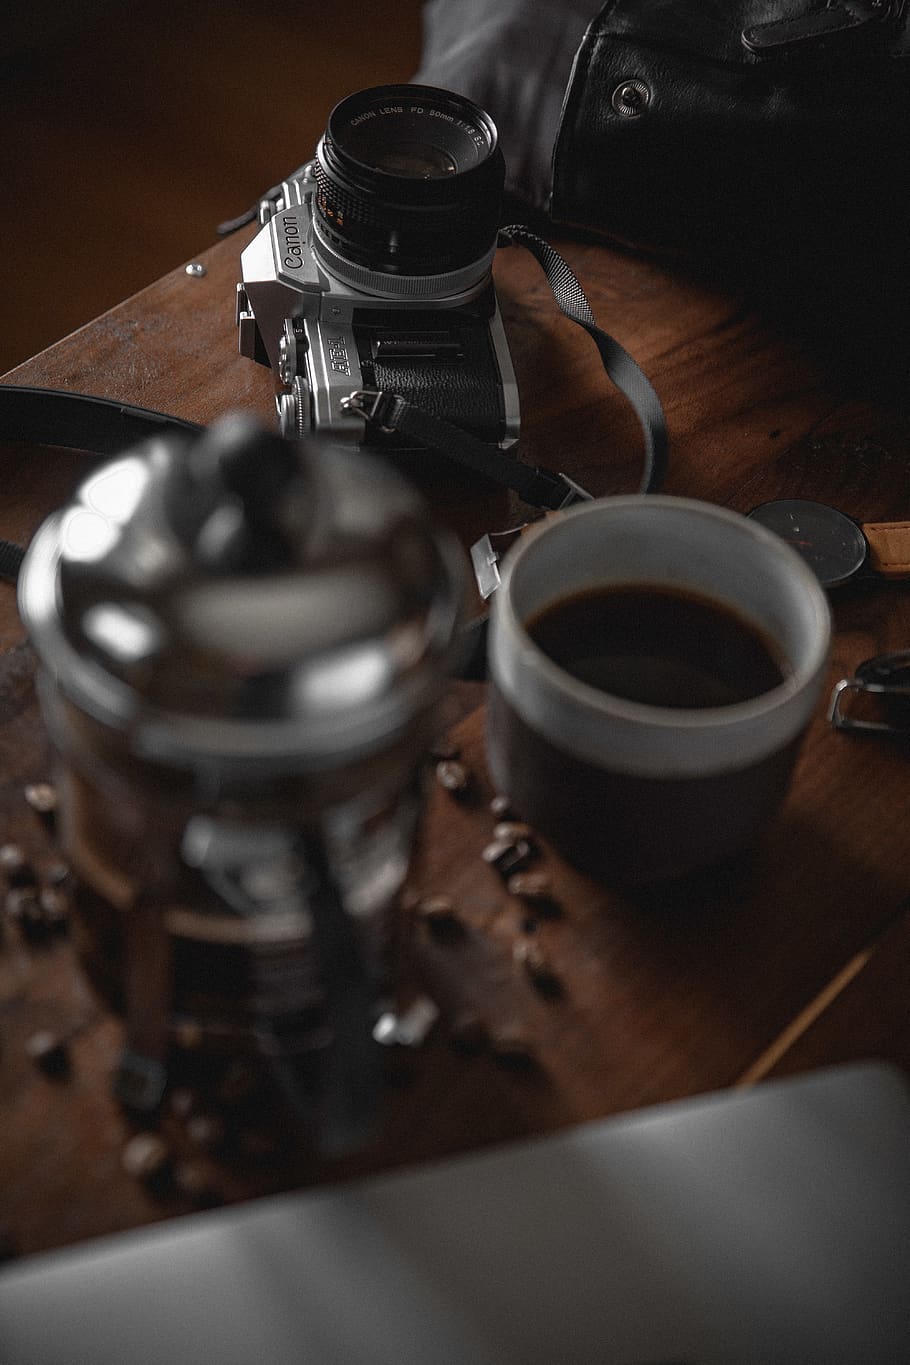 White Ceramic Teacup, black, brown, caffeine, camera, canon, classic